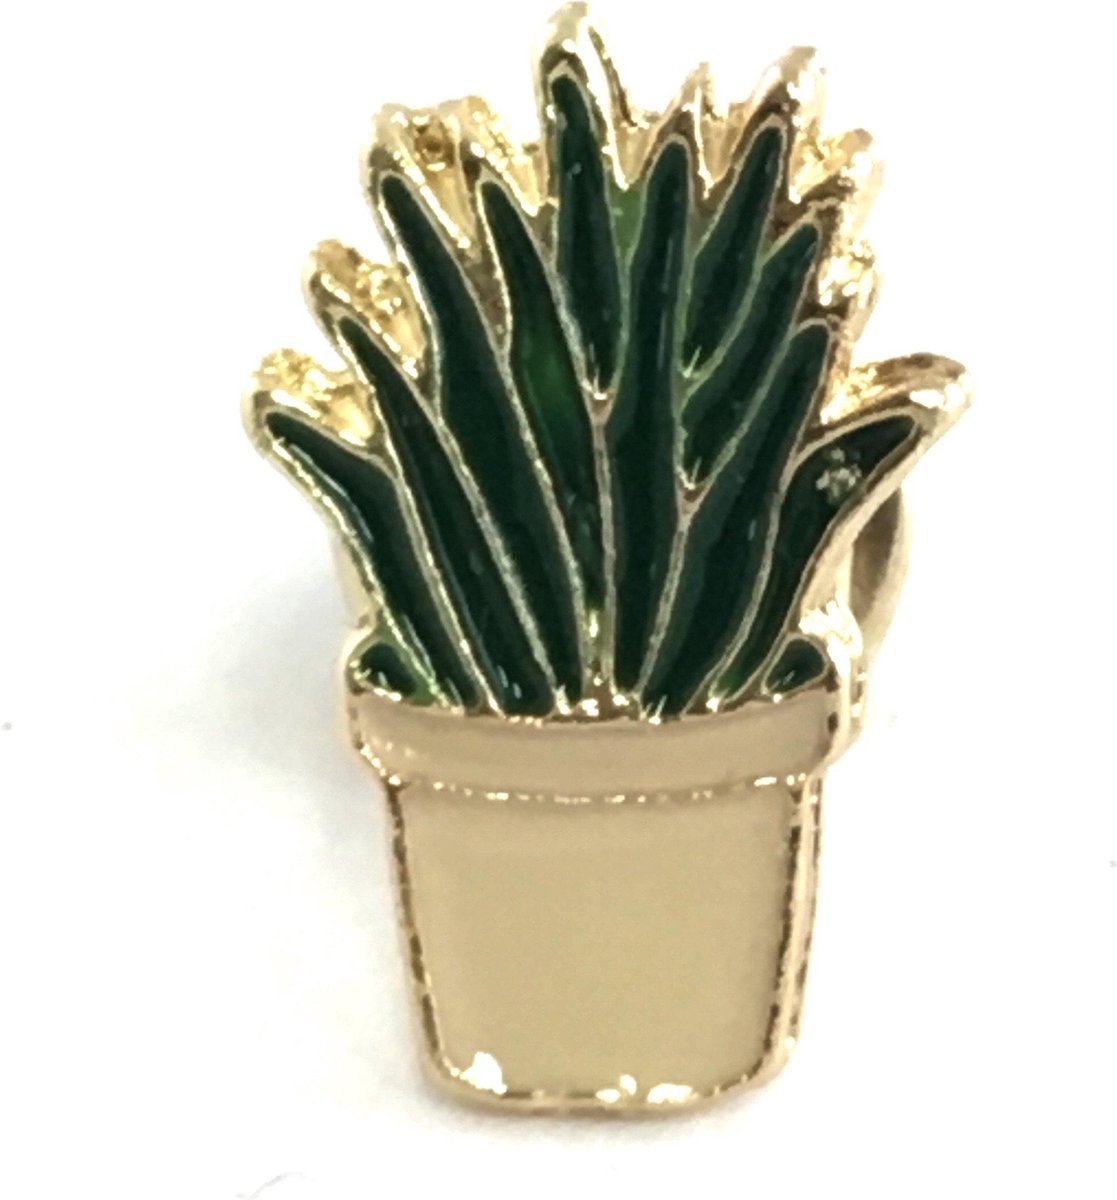 Cactus Vetplant Bloempot Emaille Pin 1.4 cm / 2.1 cm / Beige Groen Goud